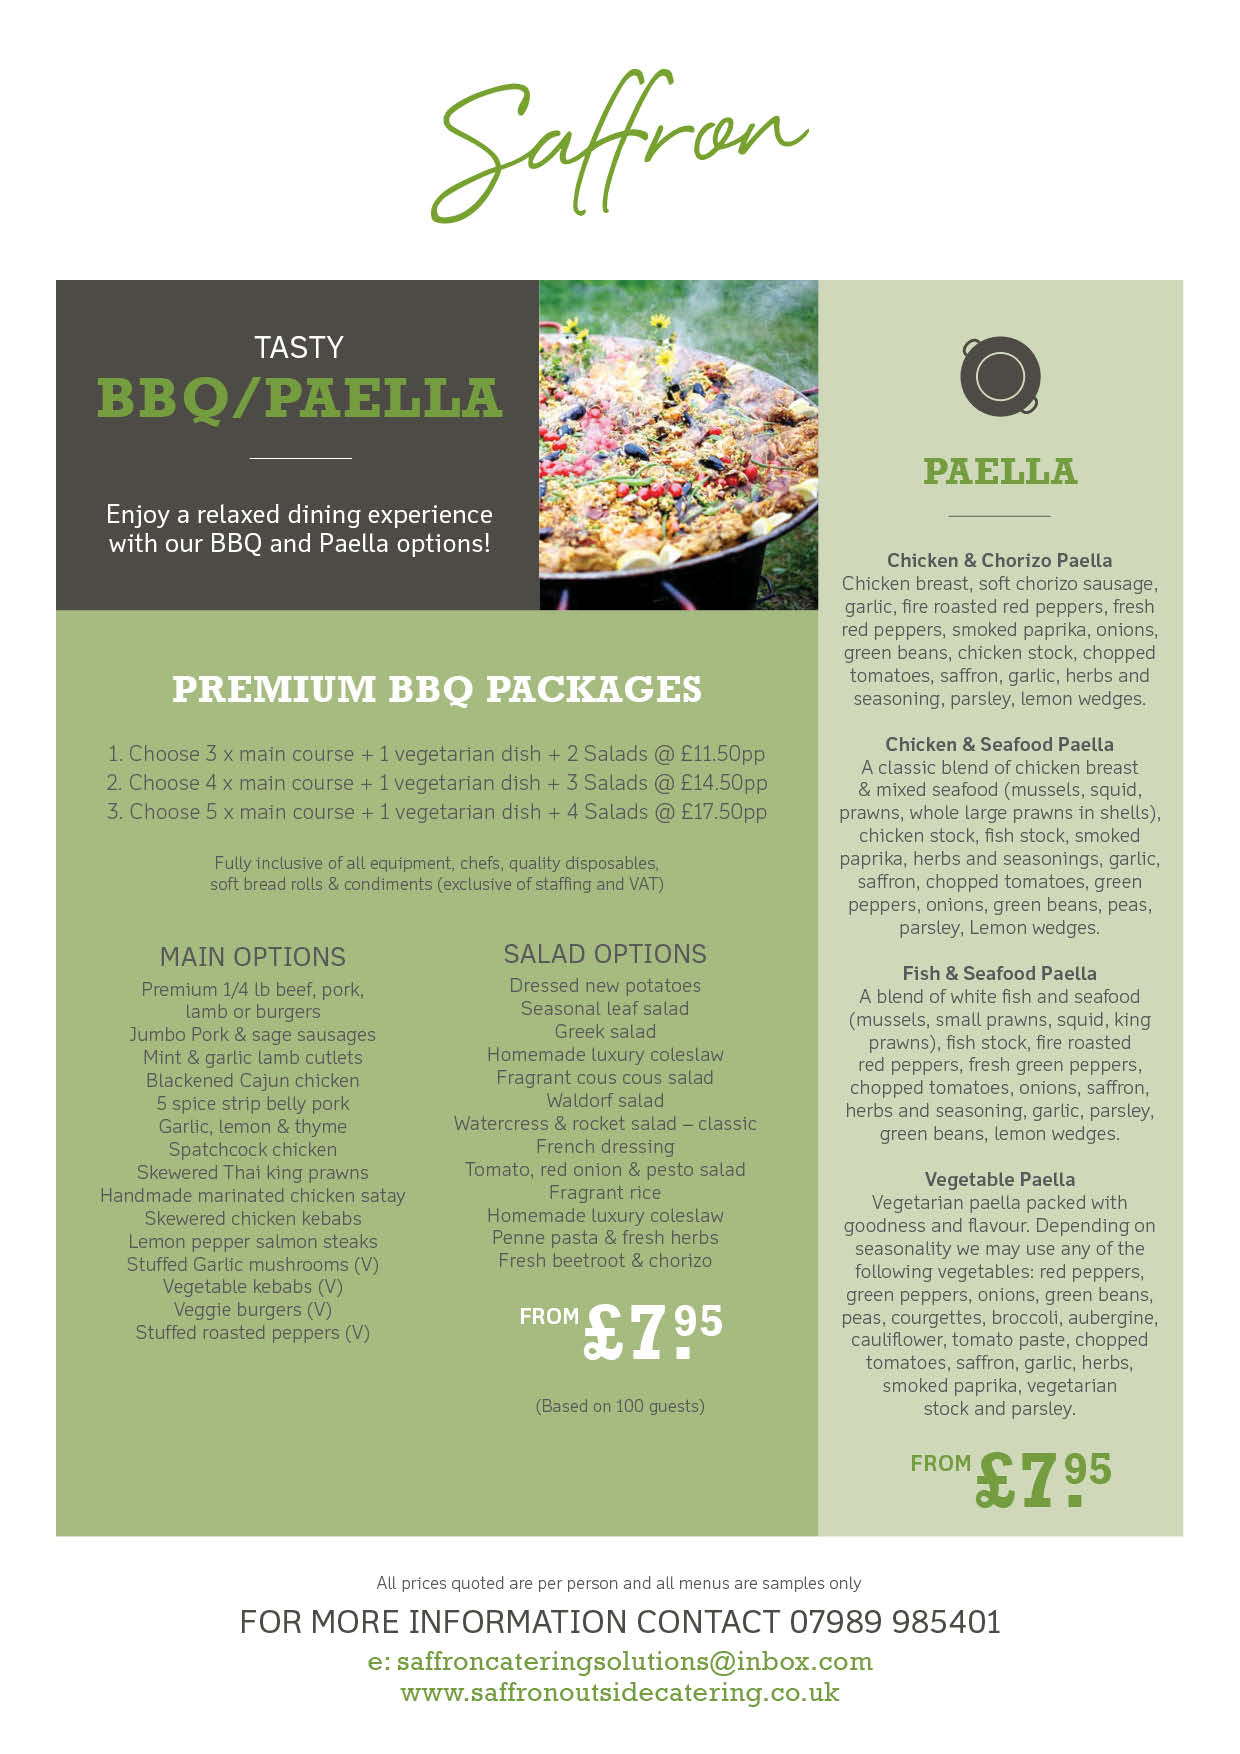 bbq paella - Paella Catering Nottingham